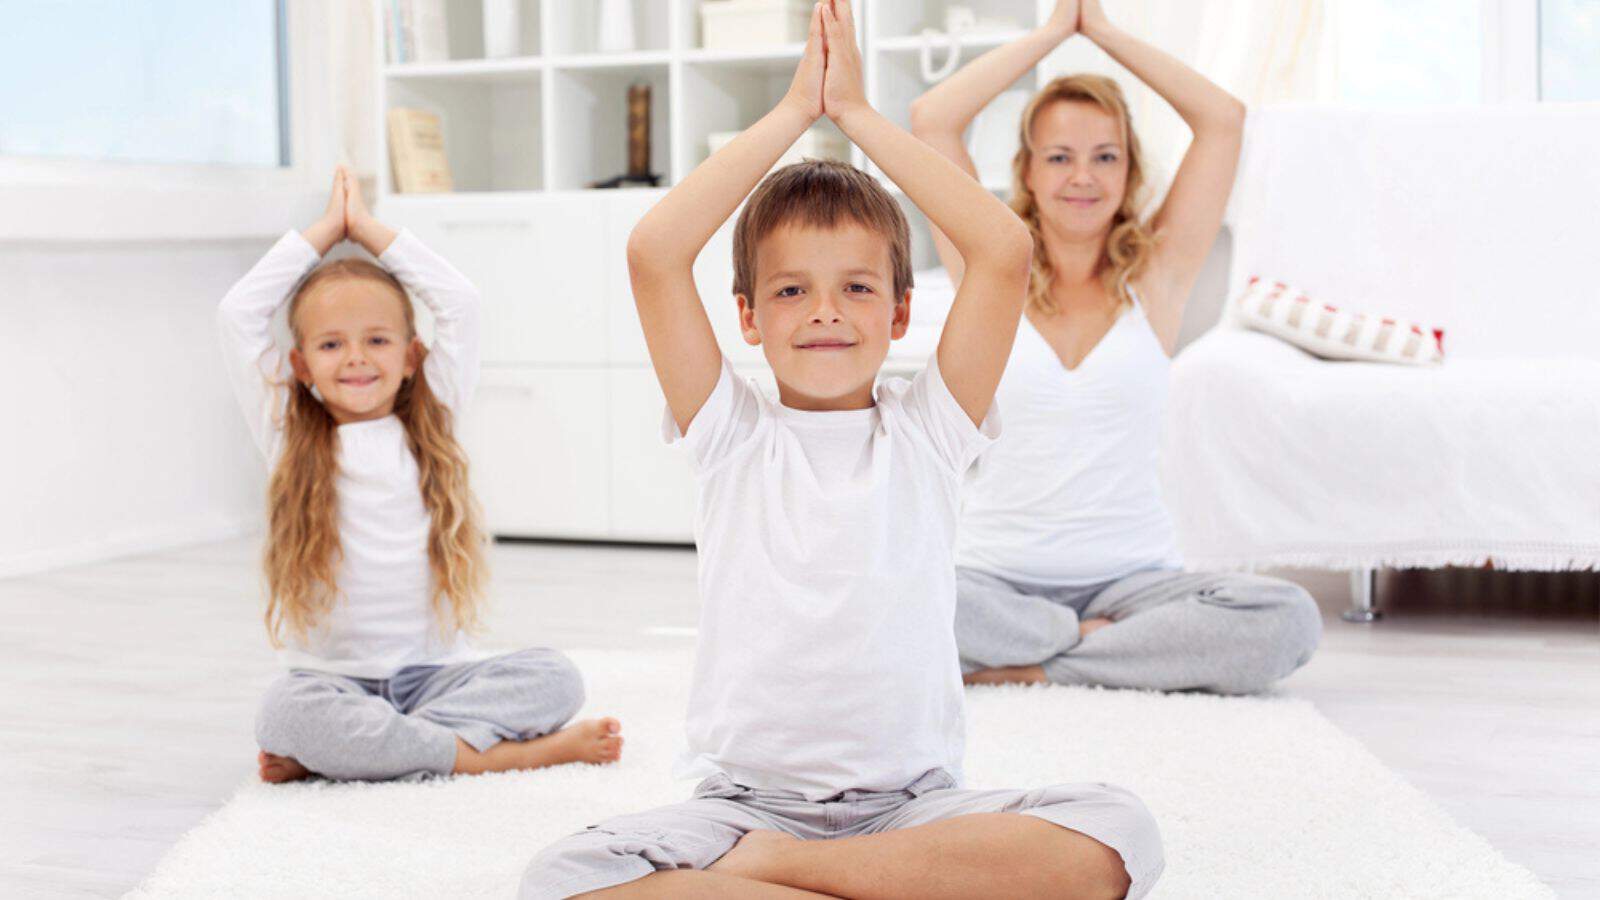 Happy balanced life - doing yoga exercise